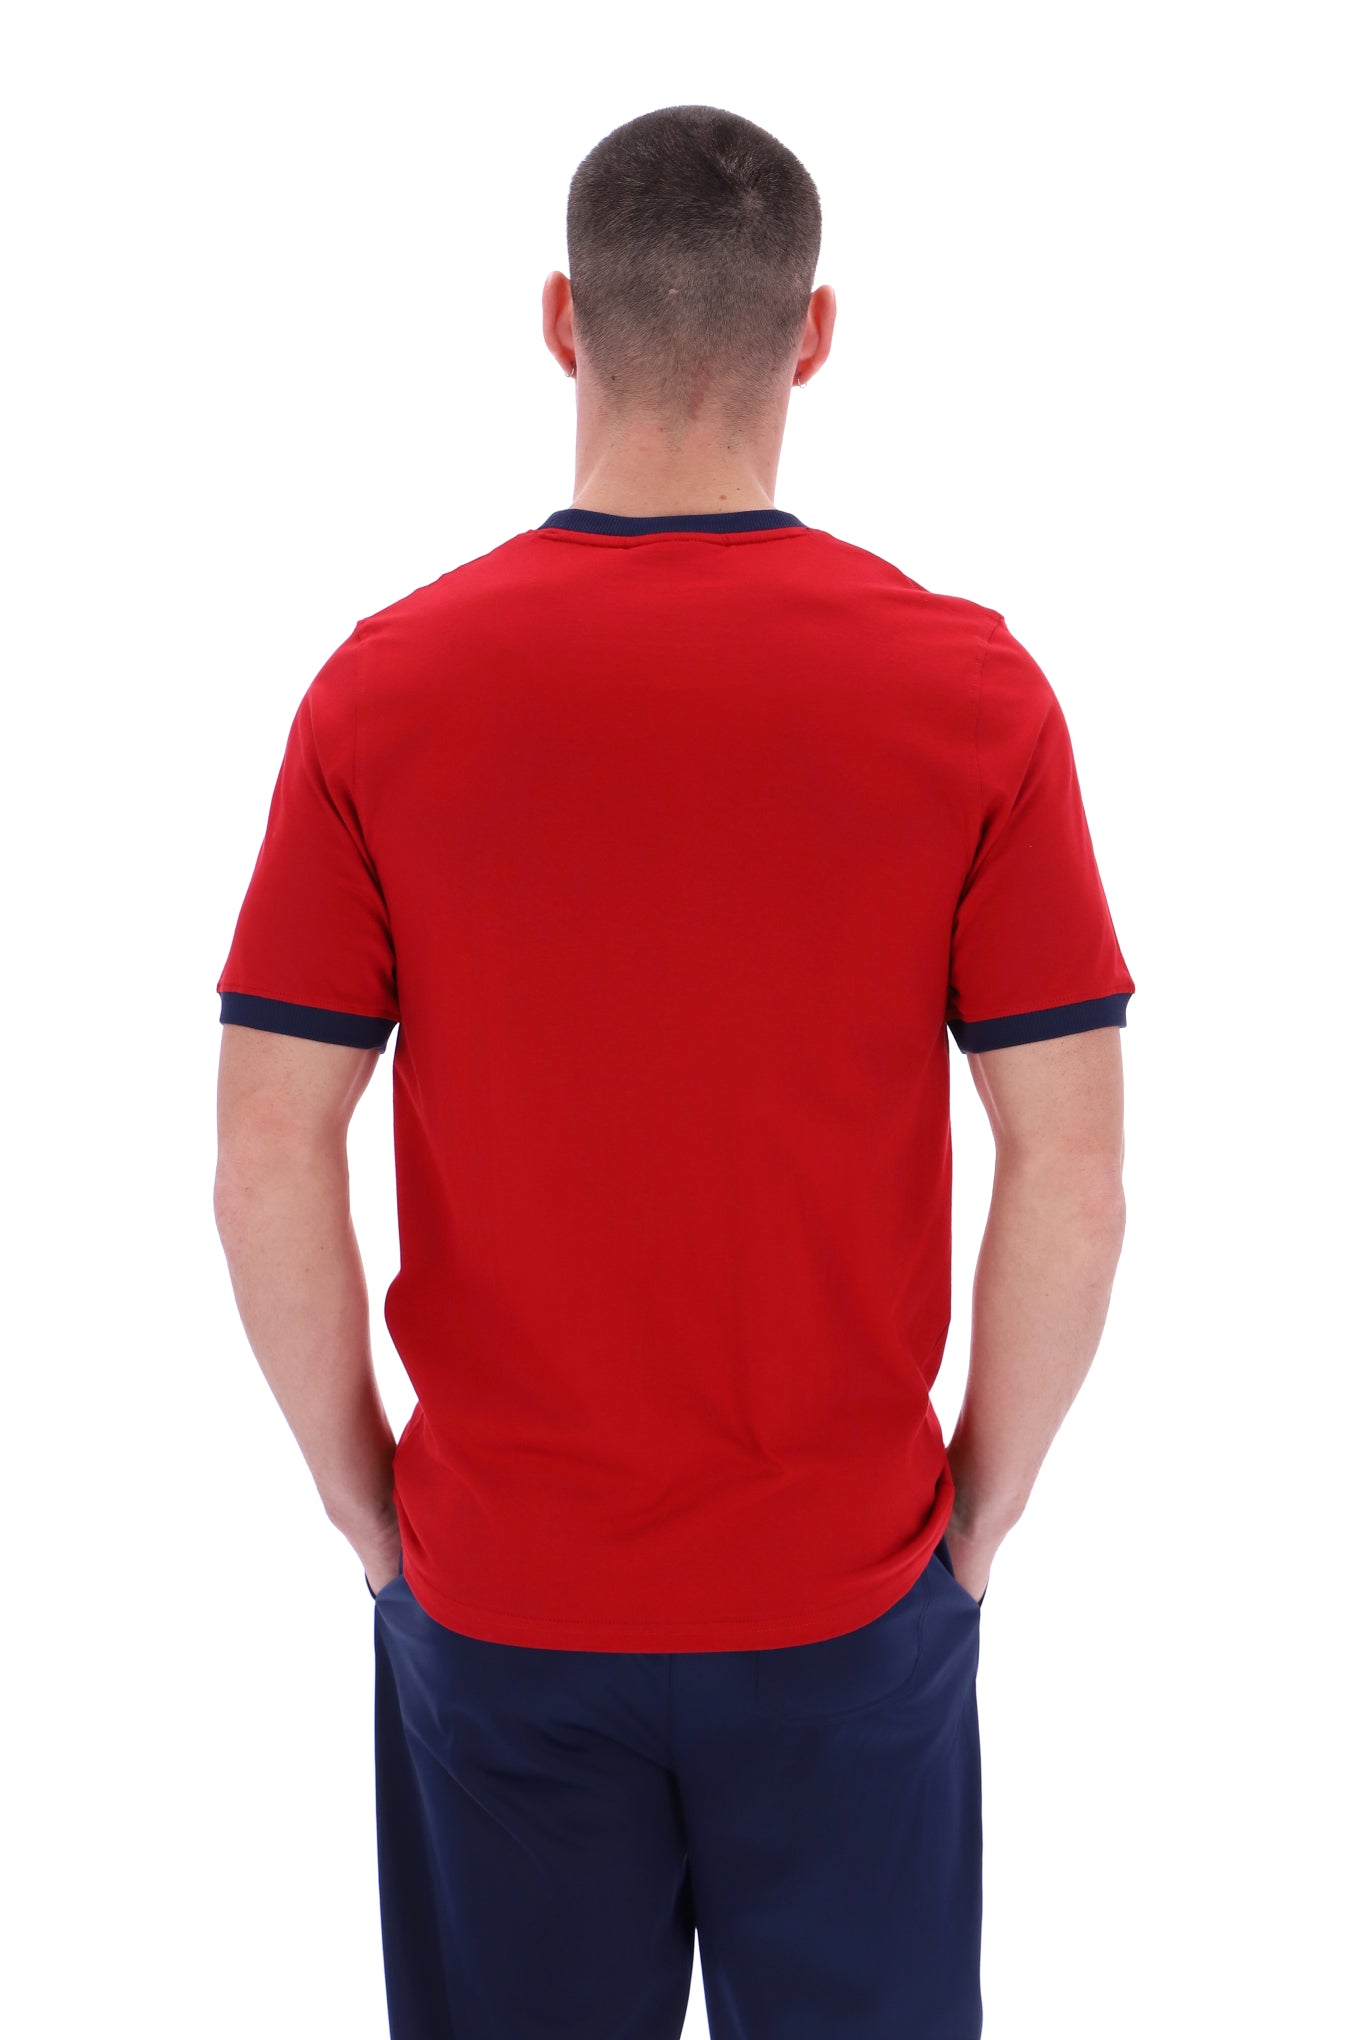 FILA Marconi T-shirt - Fila Red/White